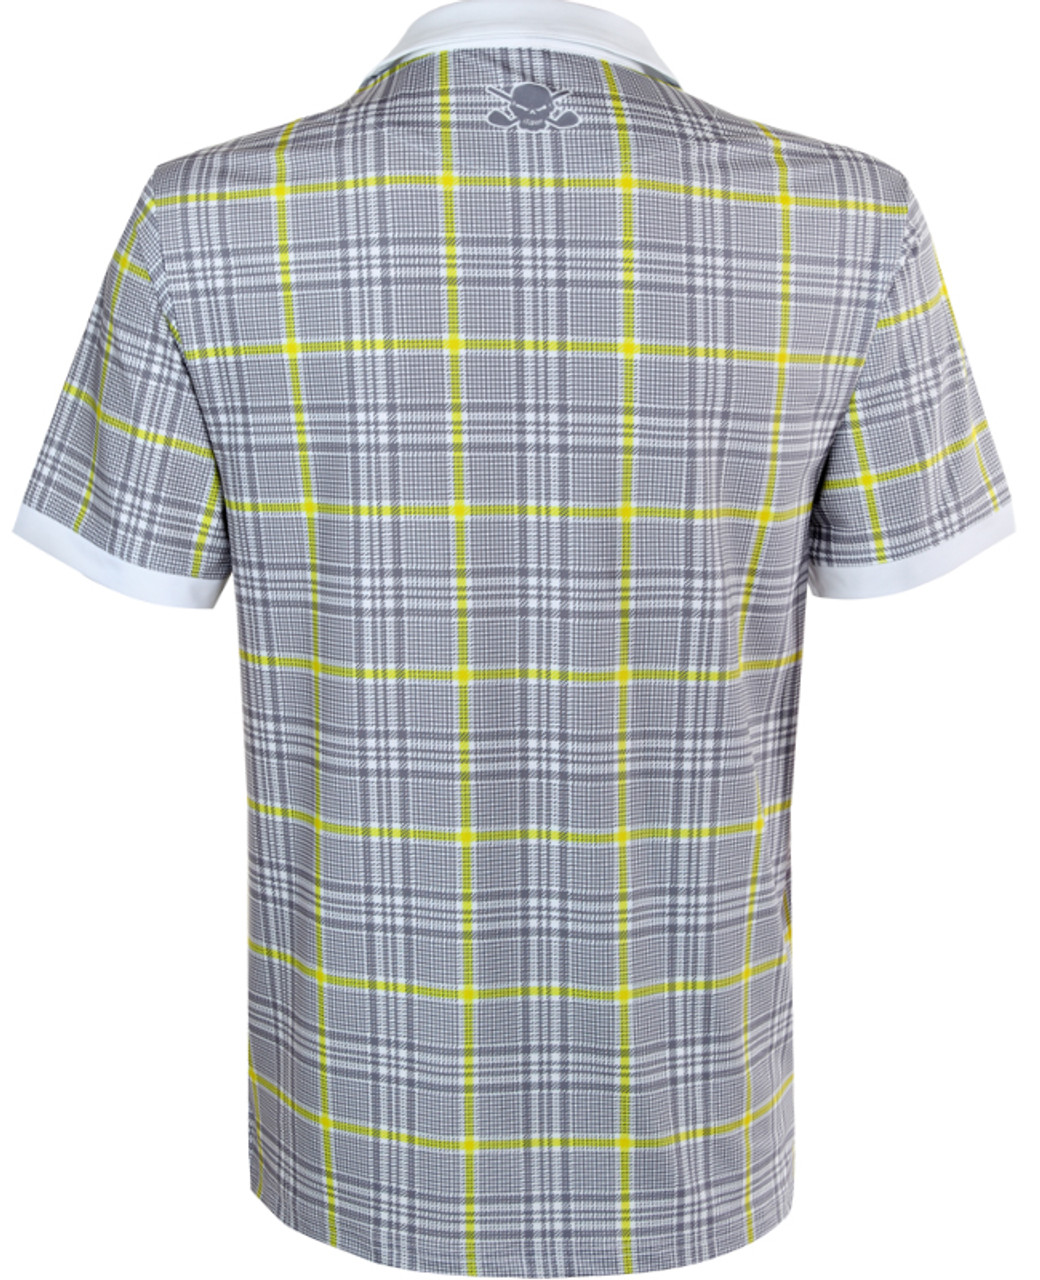 HT Plaid yellow golf shirt, Men's Performance Golf Polo, Golf Shirts ...